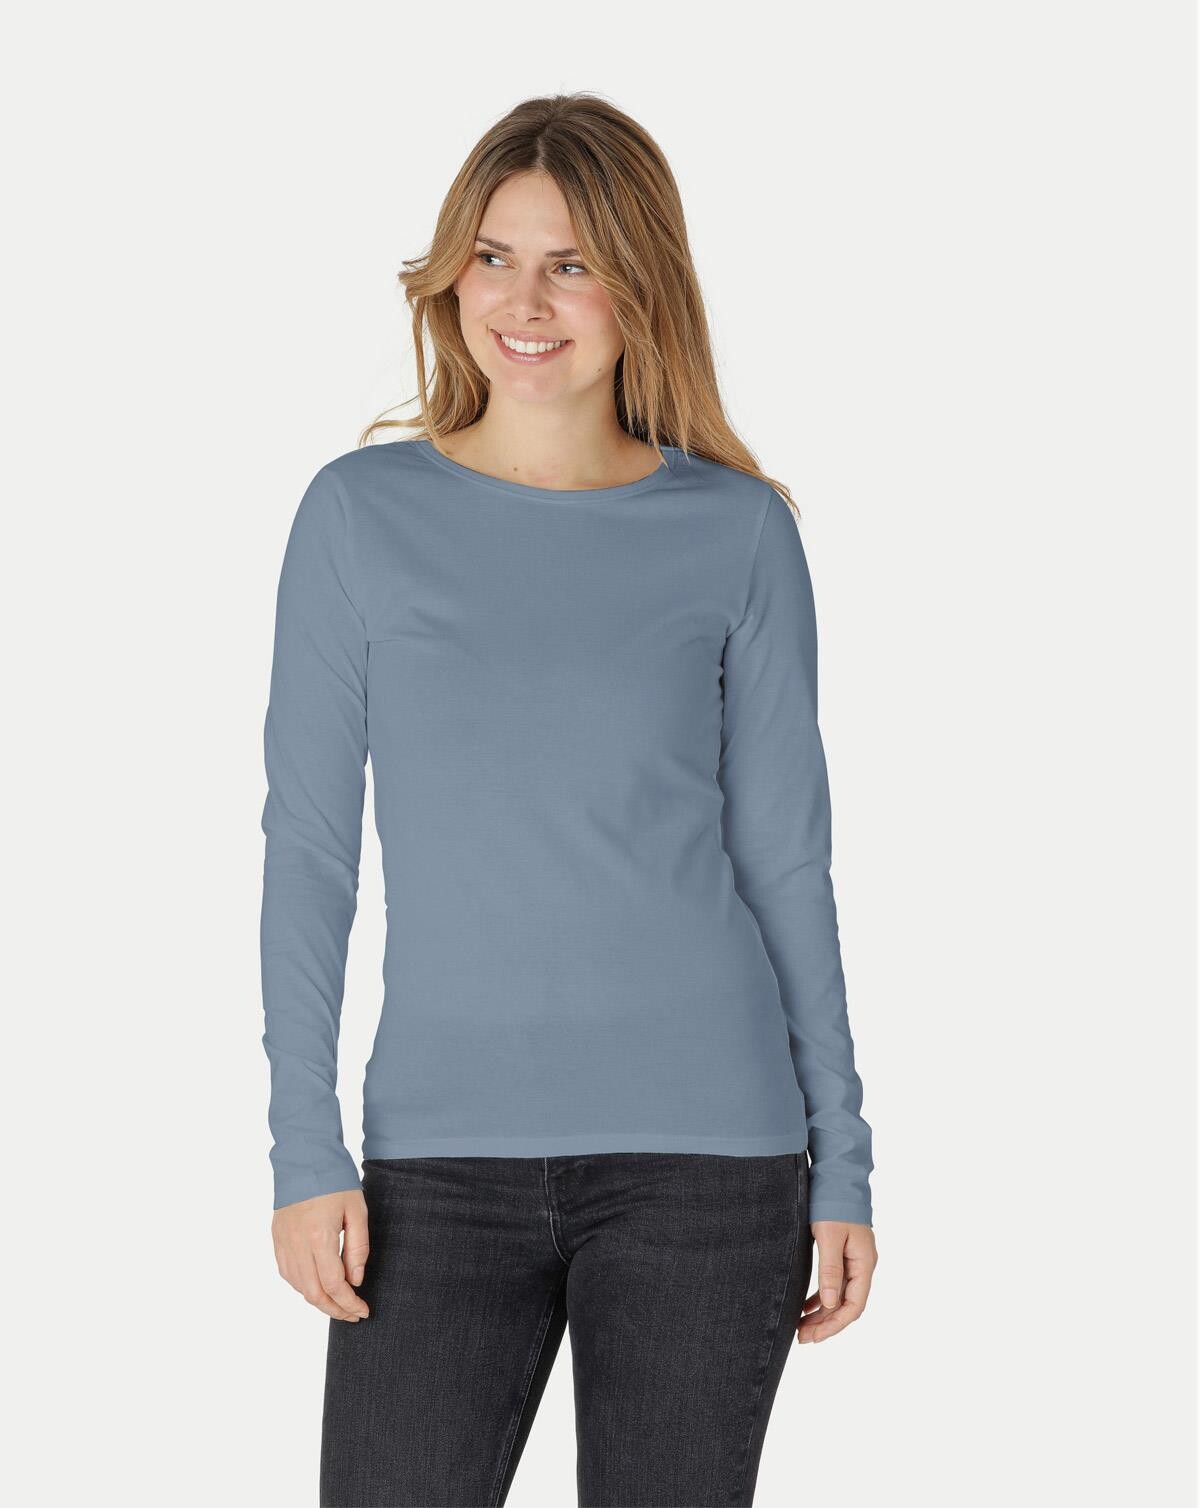 Neutral Organic - Ladies Long Sleeve T-shirt (Dusty Blue, XS)